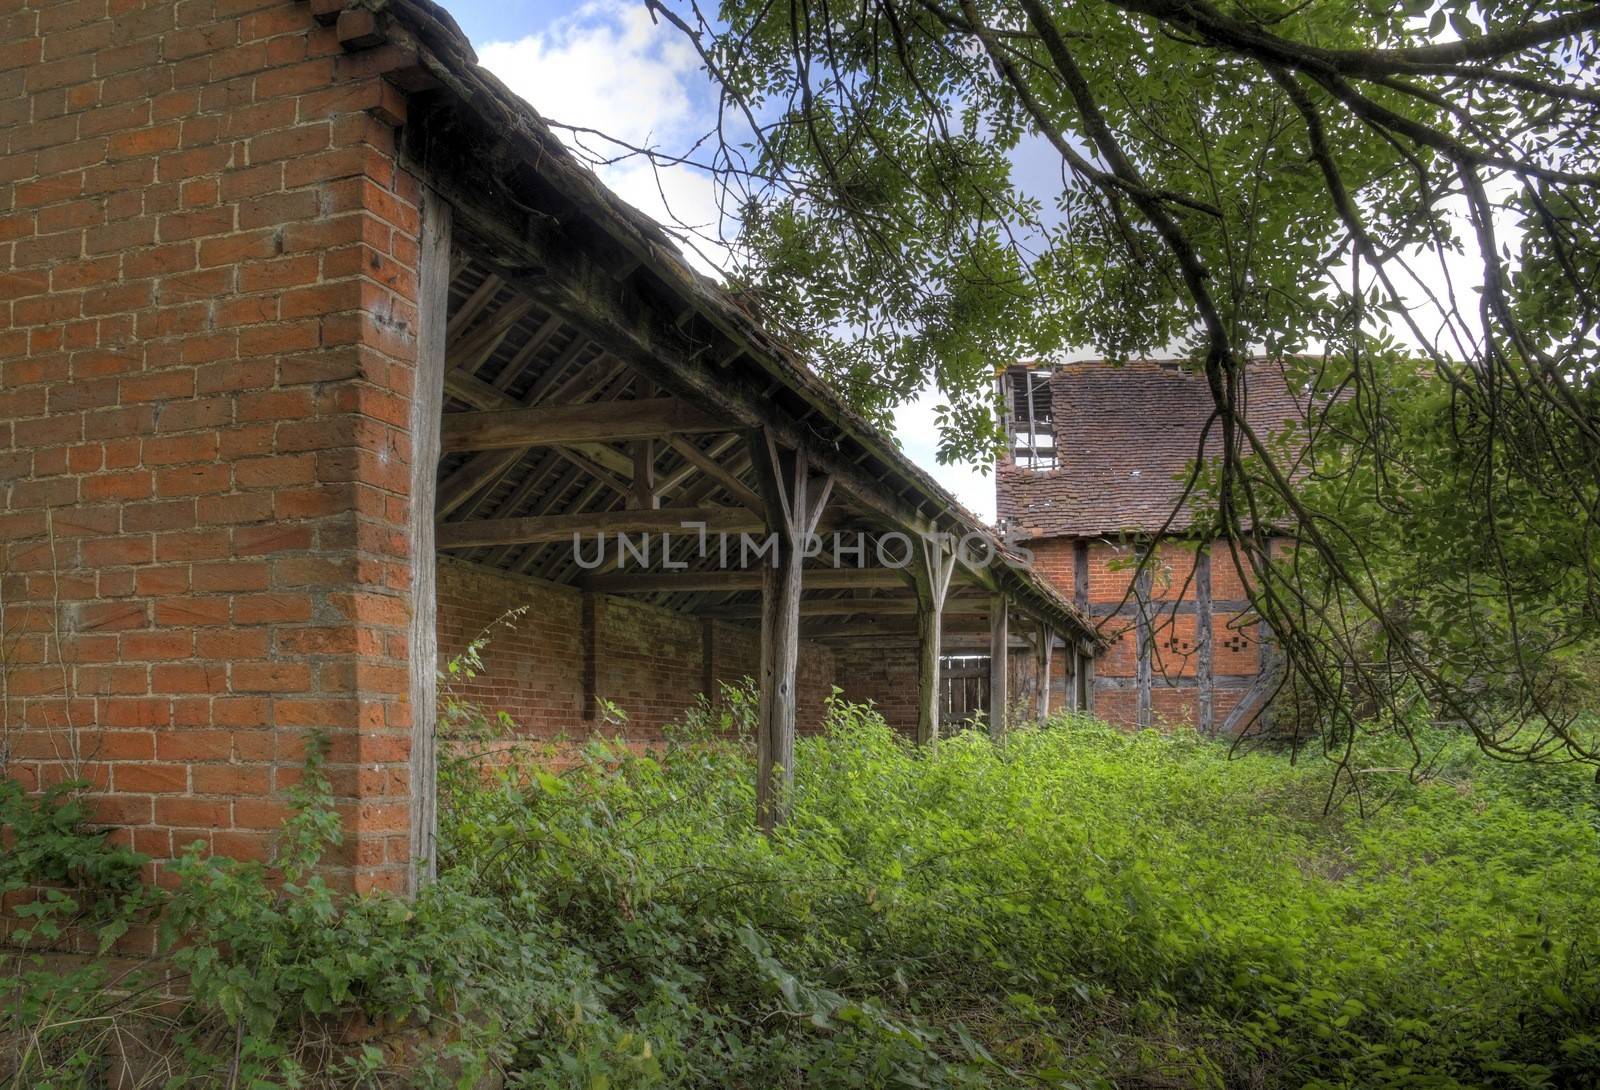 Disused farm buildings, Warwickshire, England.